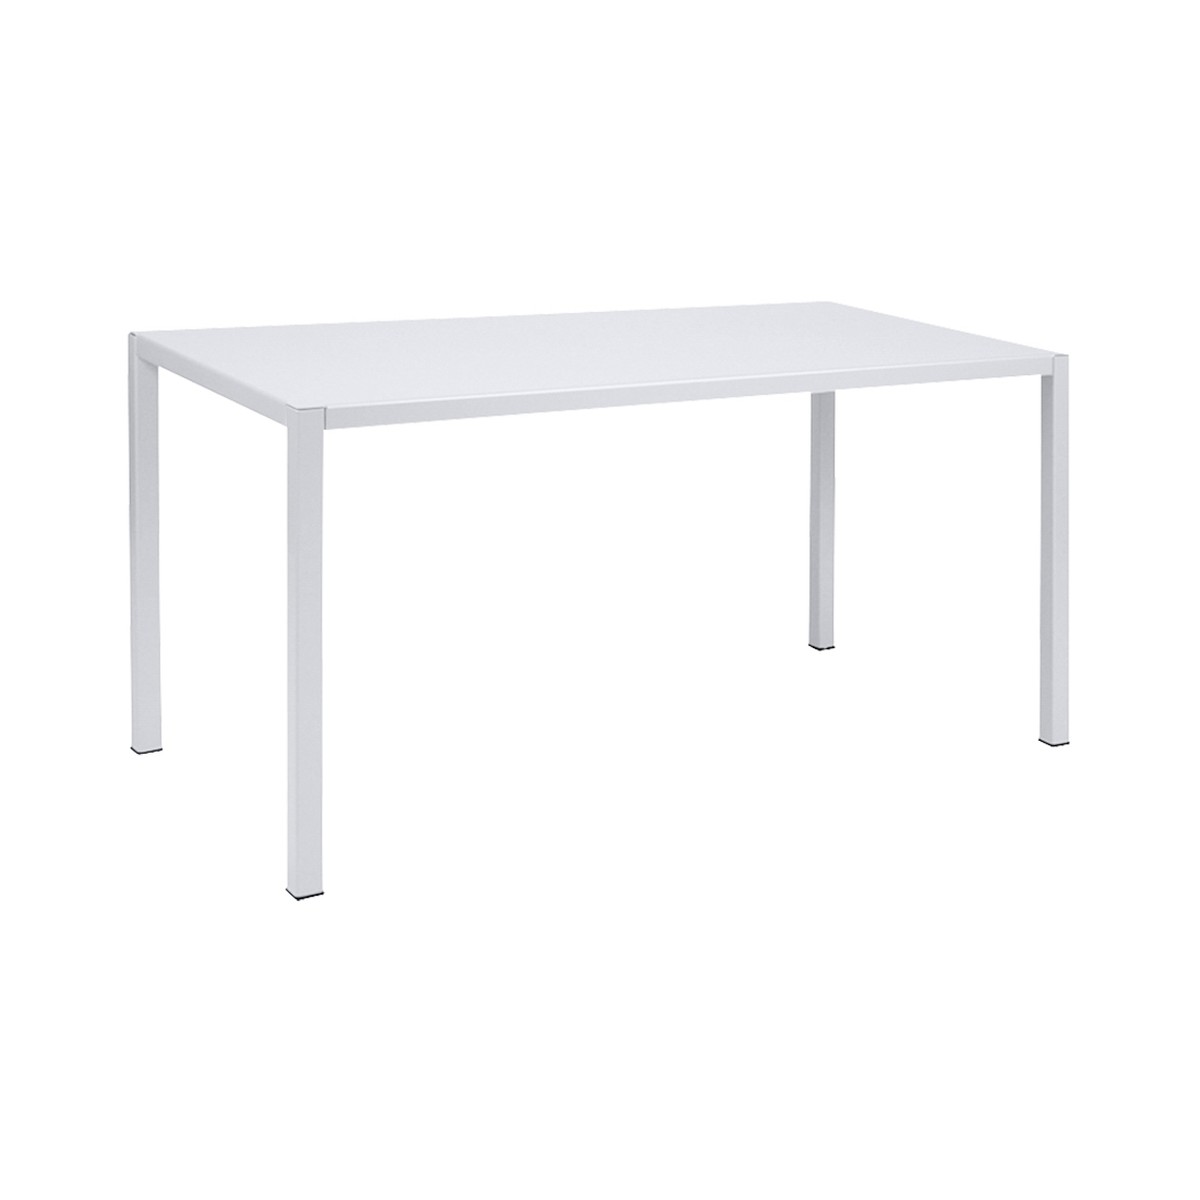 Fermob Inside Out Table Inside Out rectangulaire Blanc L 140 x l 70 x H74cm